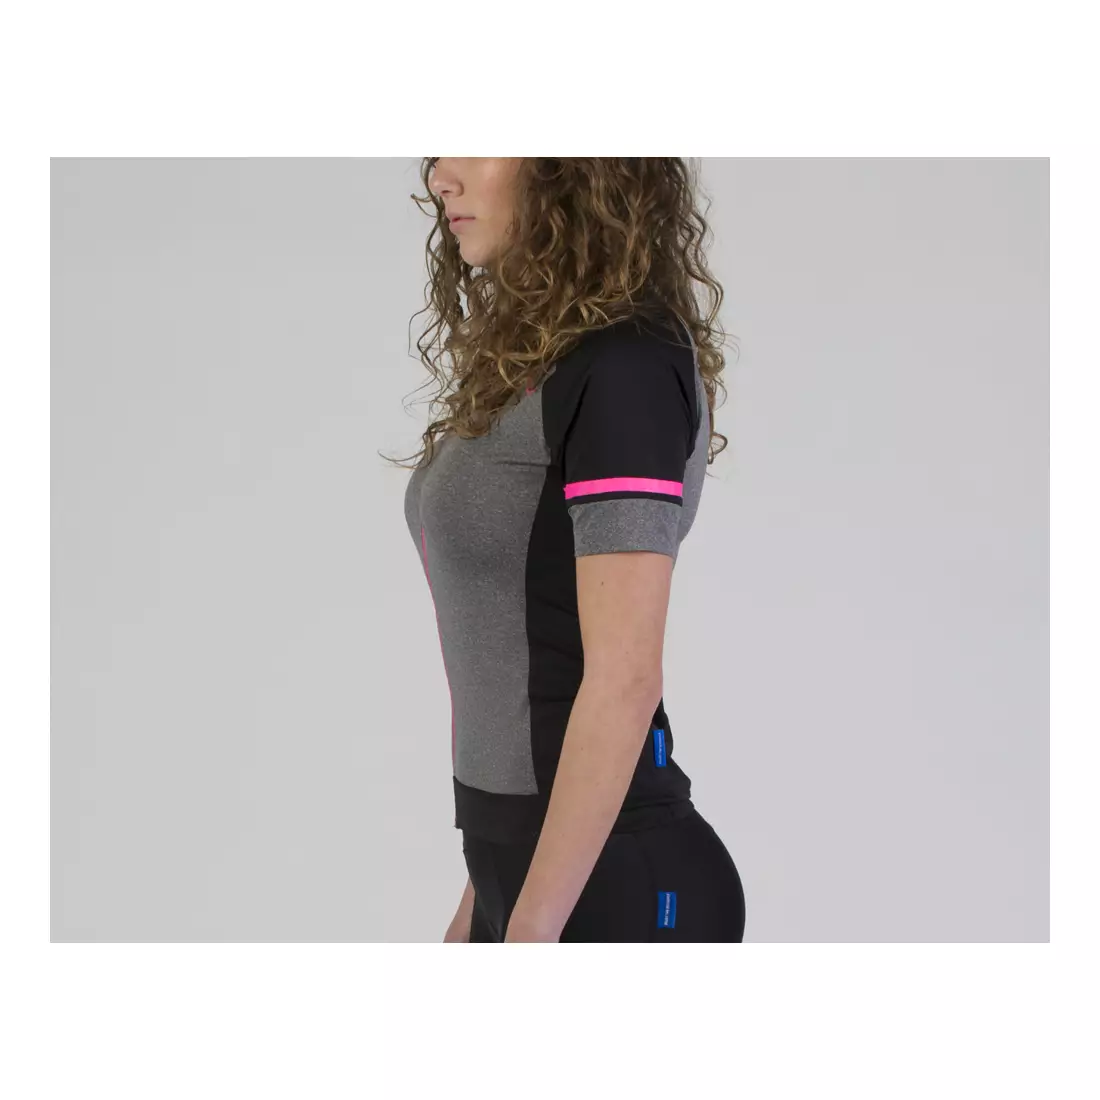 ROGELLI CARLYN 2.0 women's cycling jersey, black-gray-pink 010.107